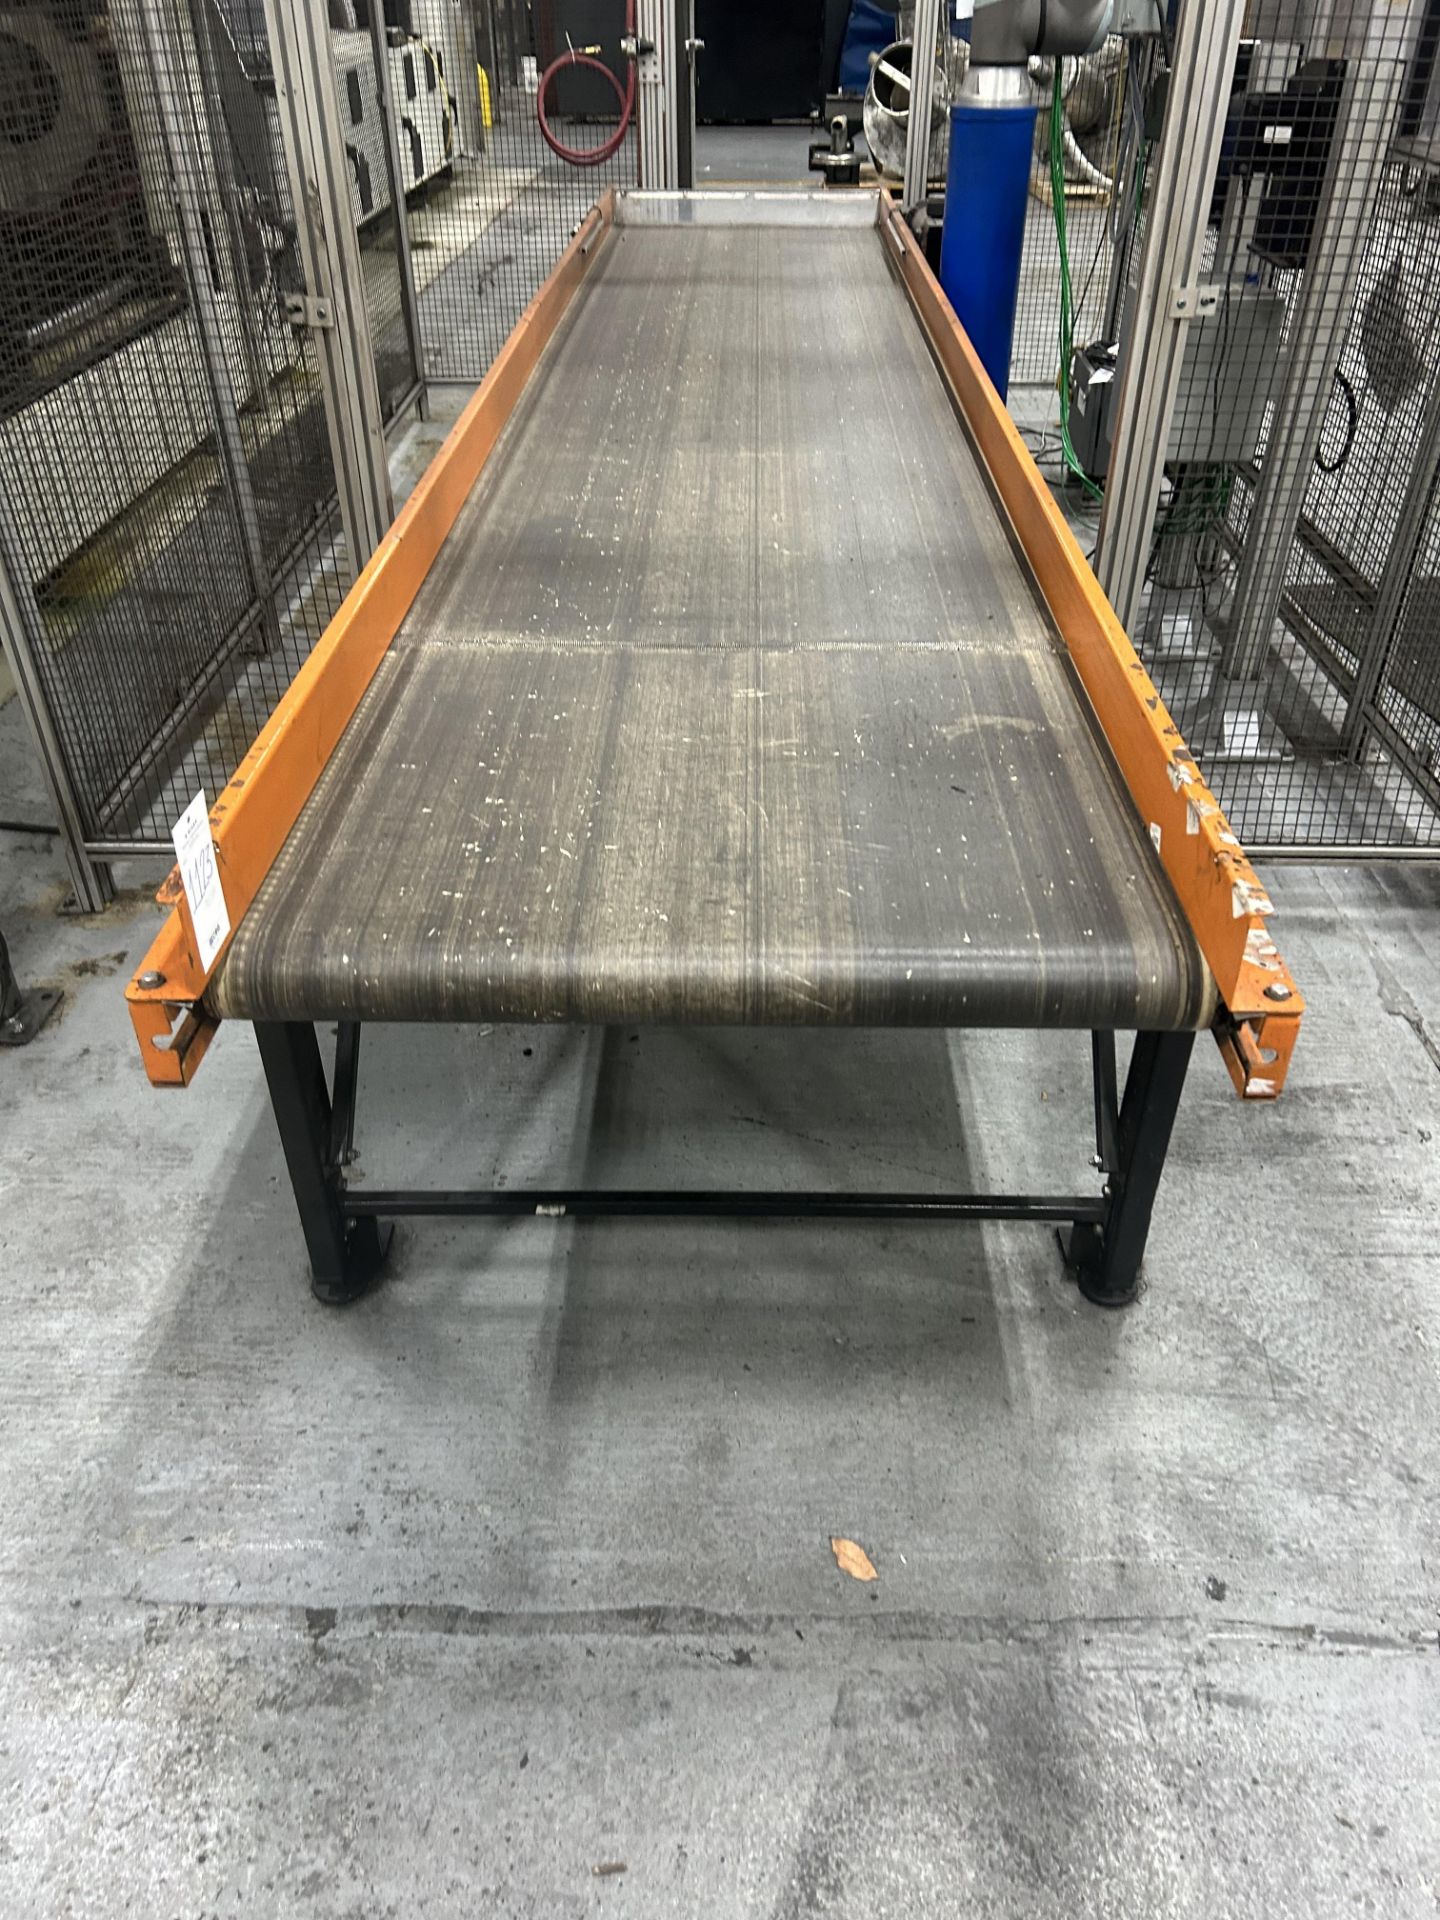 EMI conveyor - Image 2 of 2